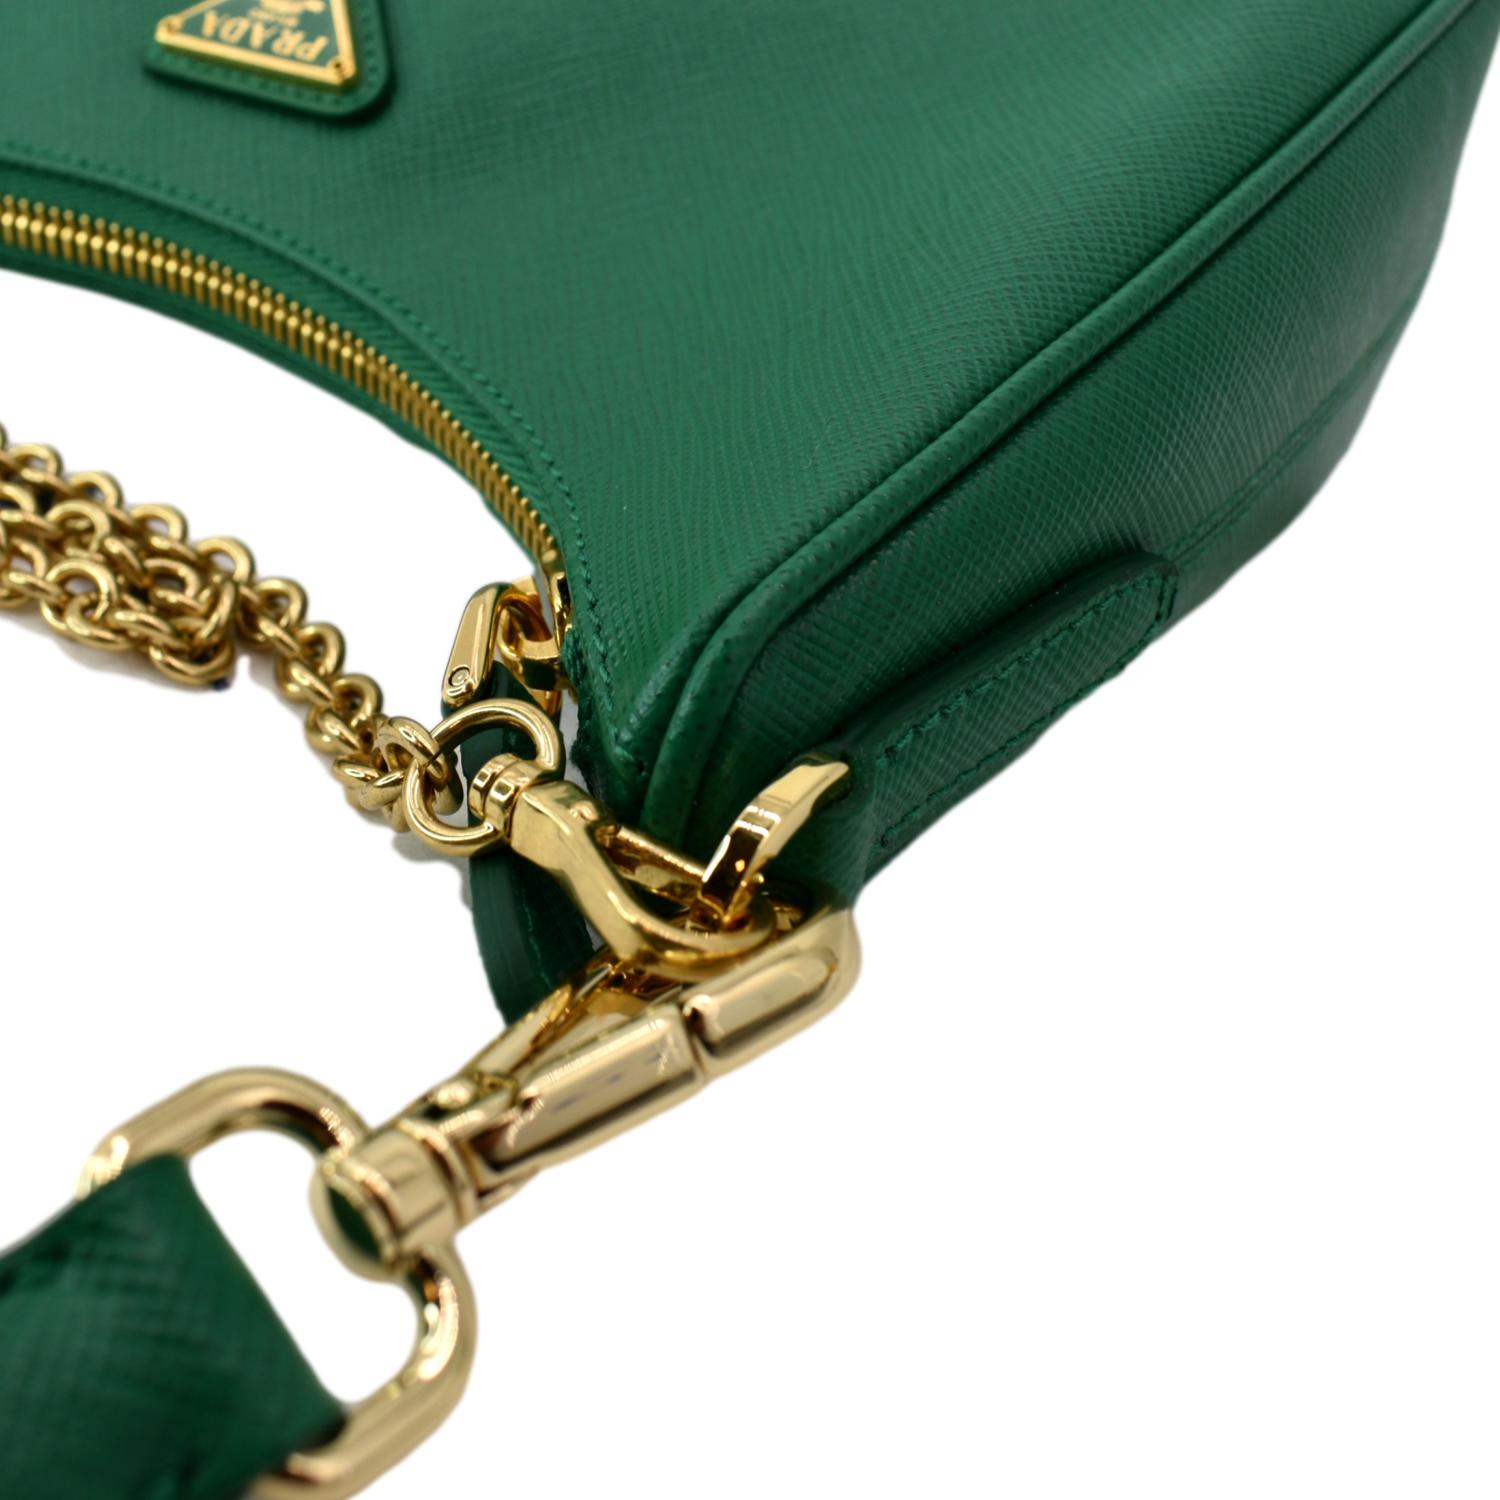 Prada Re-edition 2005 Saffiano Leather Bag in Green